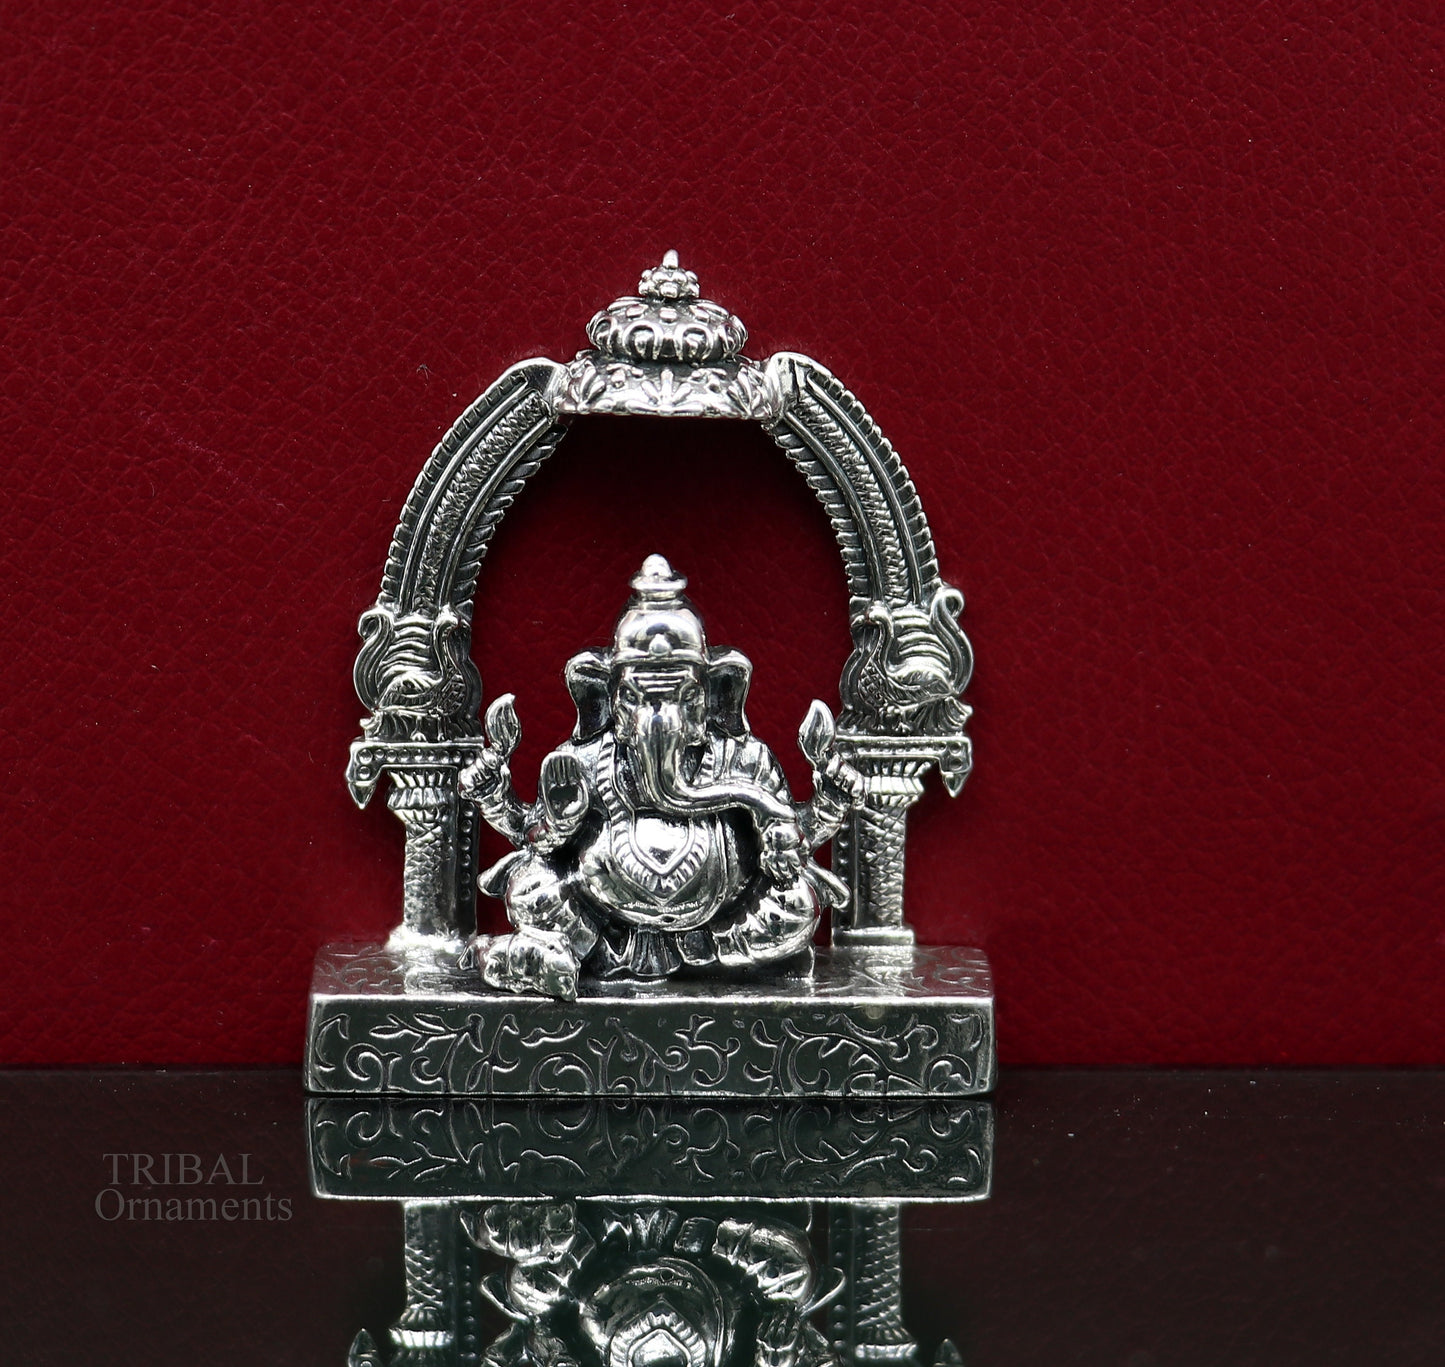 925 Sterling silver Lord Ganesh Idol, Pooja Articles, Silver Idols Figurine, handcrafted Lord Ganesh statue sculpture Diwali puja gift su229 - TRIBAL ORNAMENTS